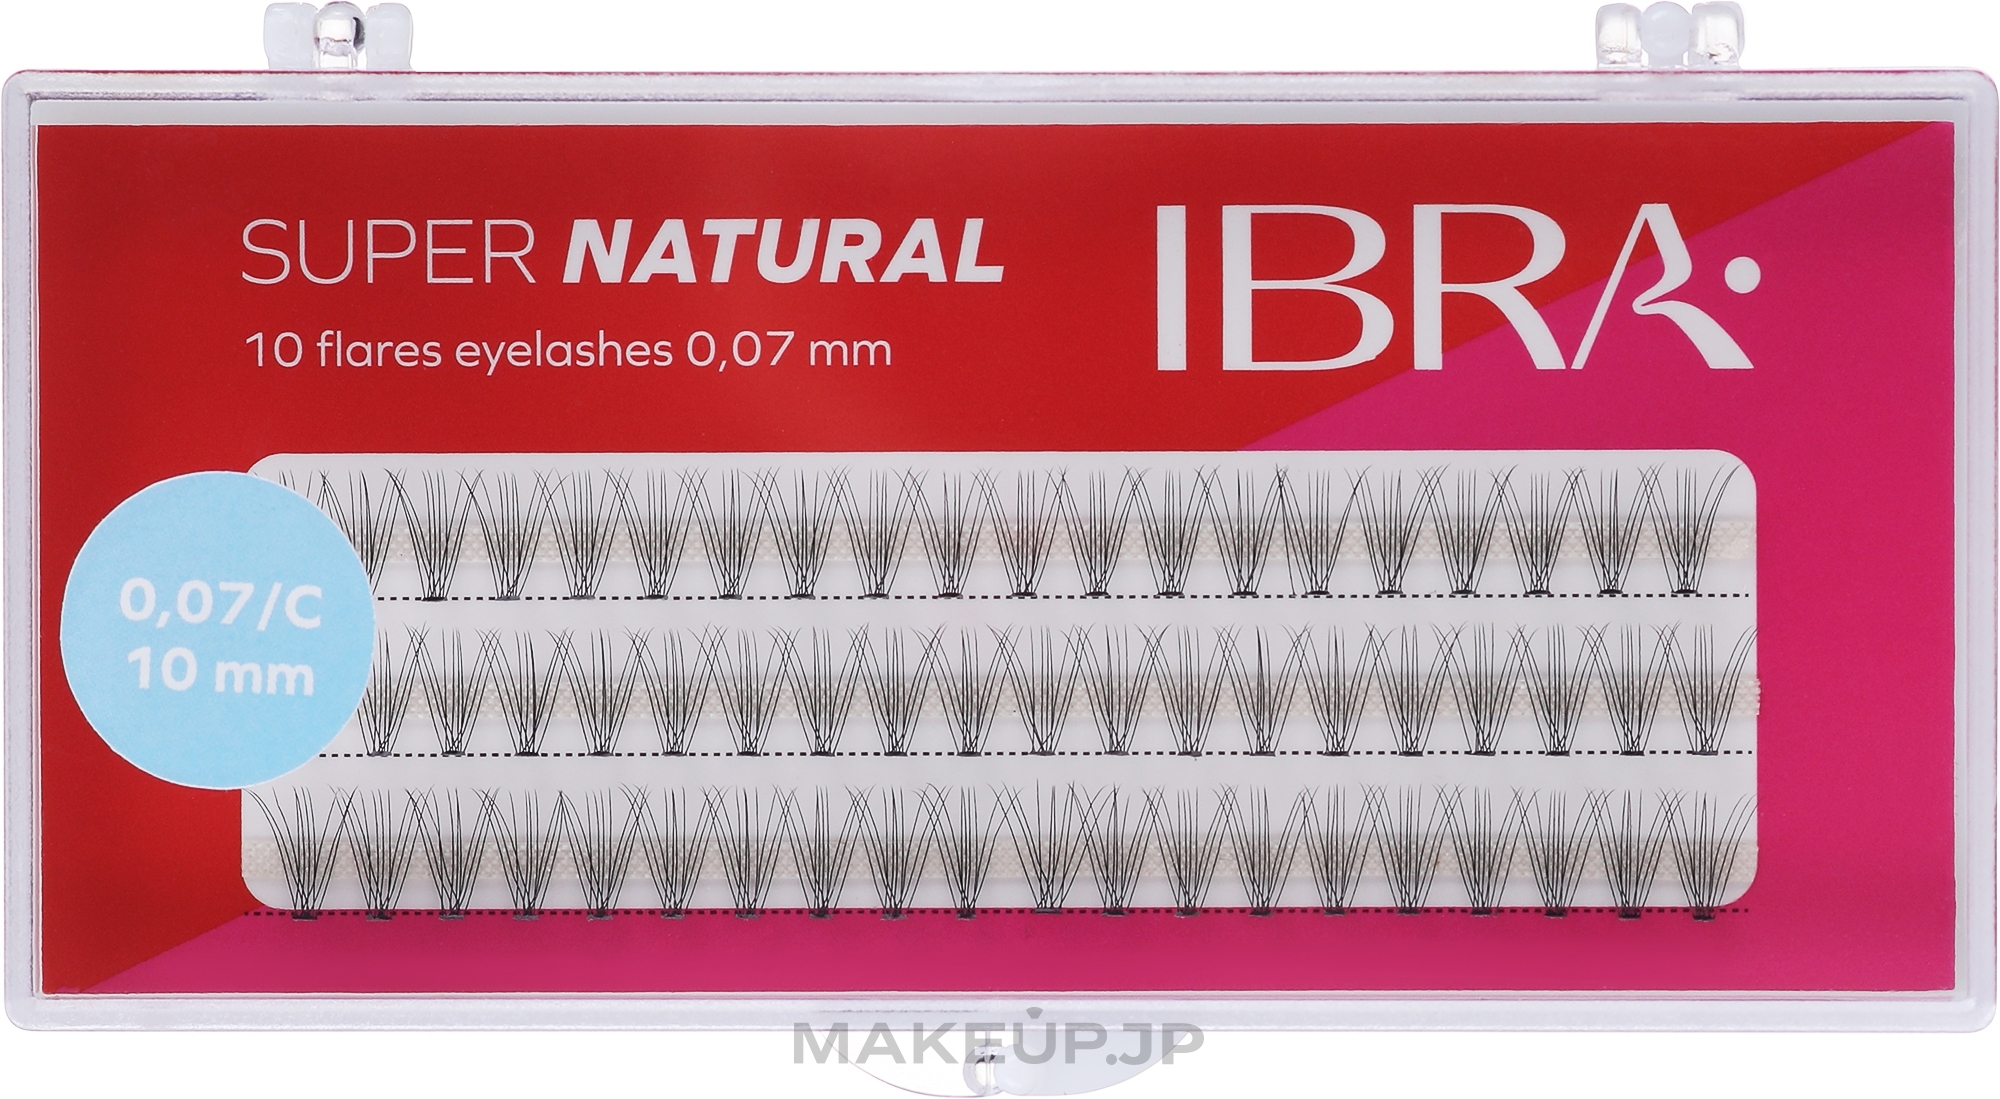 Individual Lashes, C 10mm - Ibra 10 Flares Eyelash Super Natural — photo 60 szt.